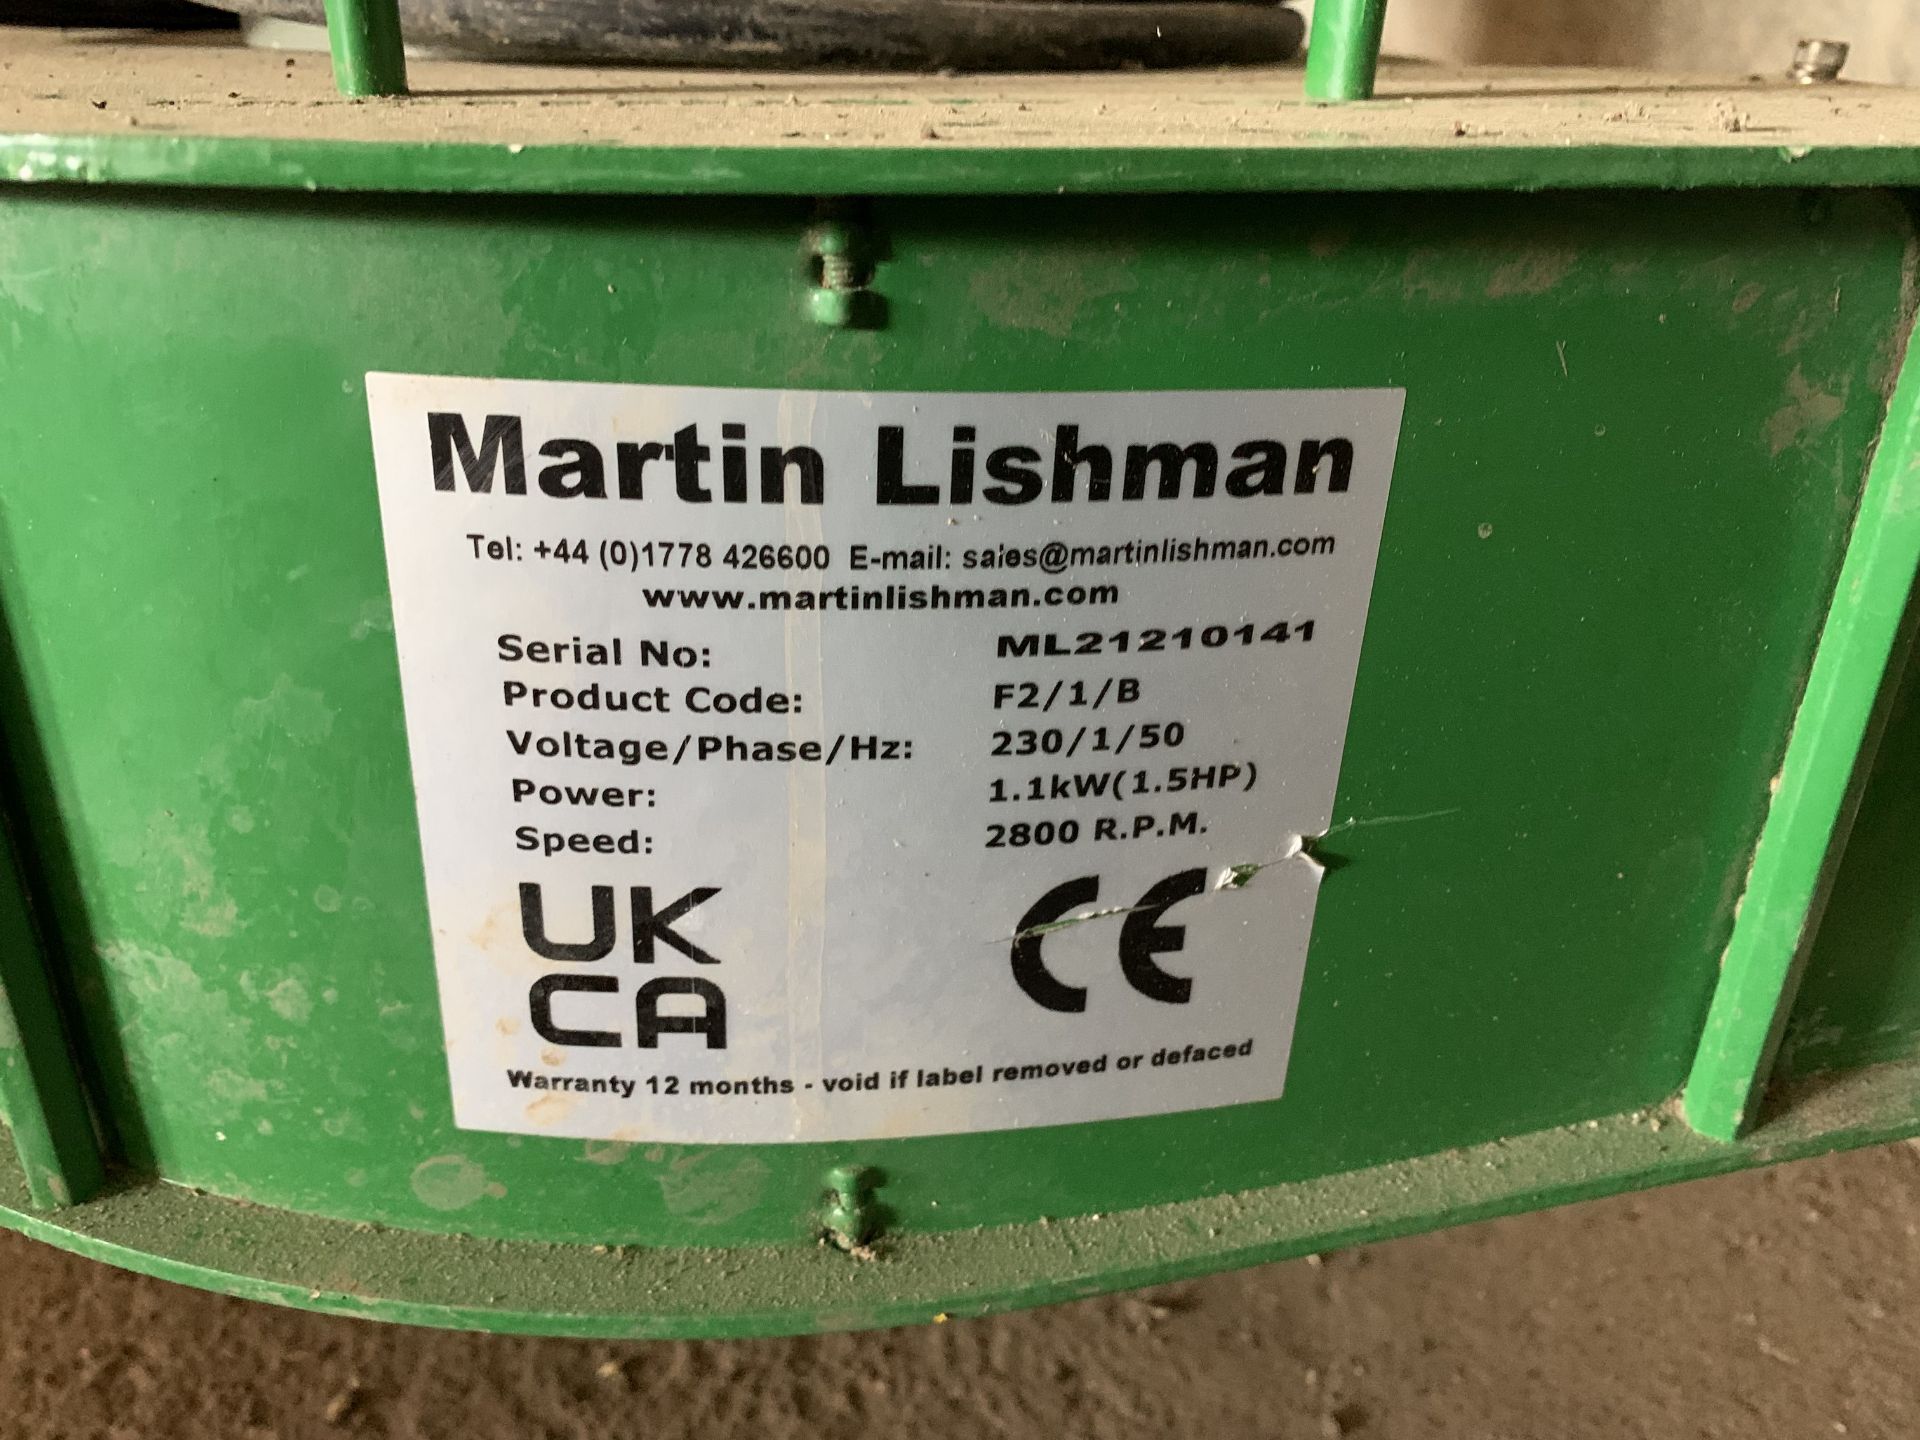 Martin Lishman 1ph grain pedastal fan - Image 2 of 2